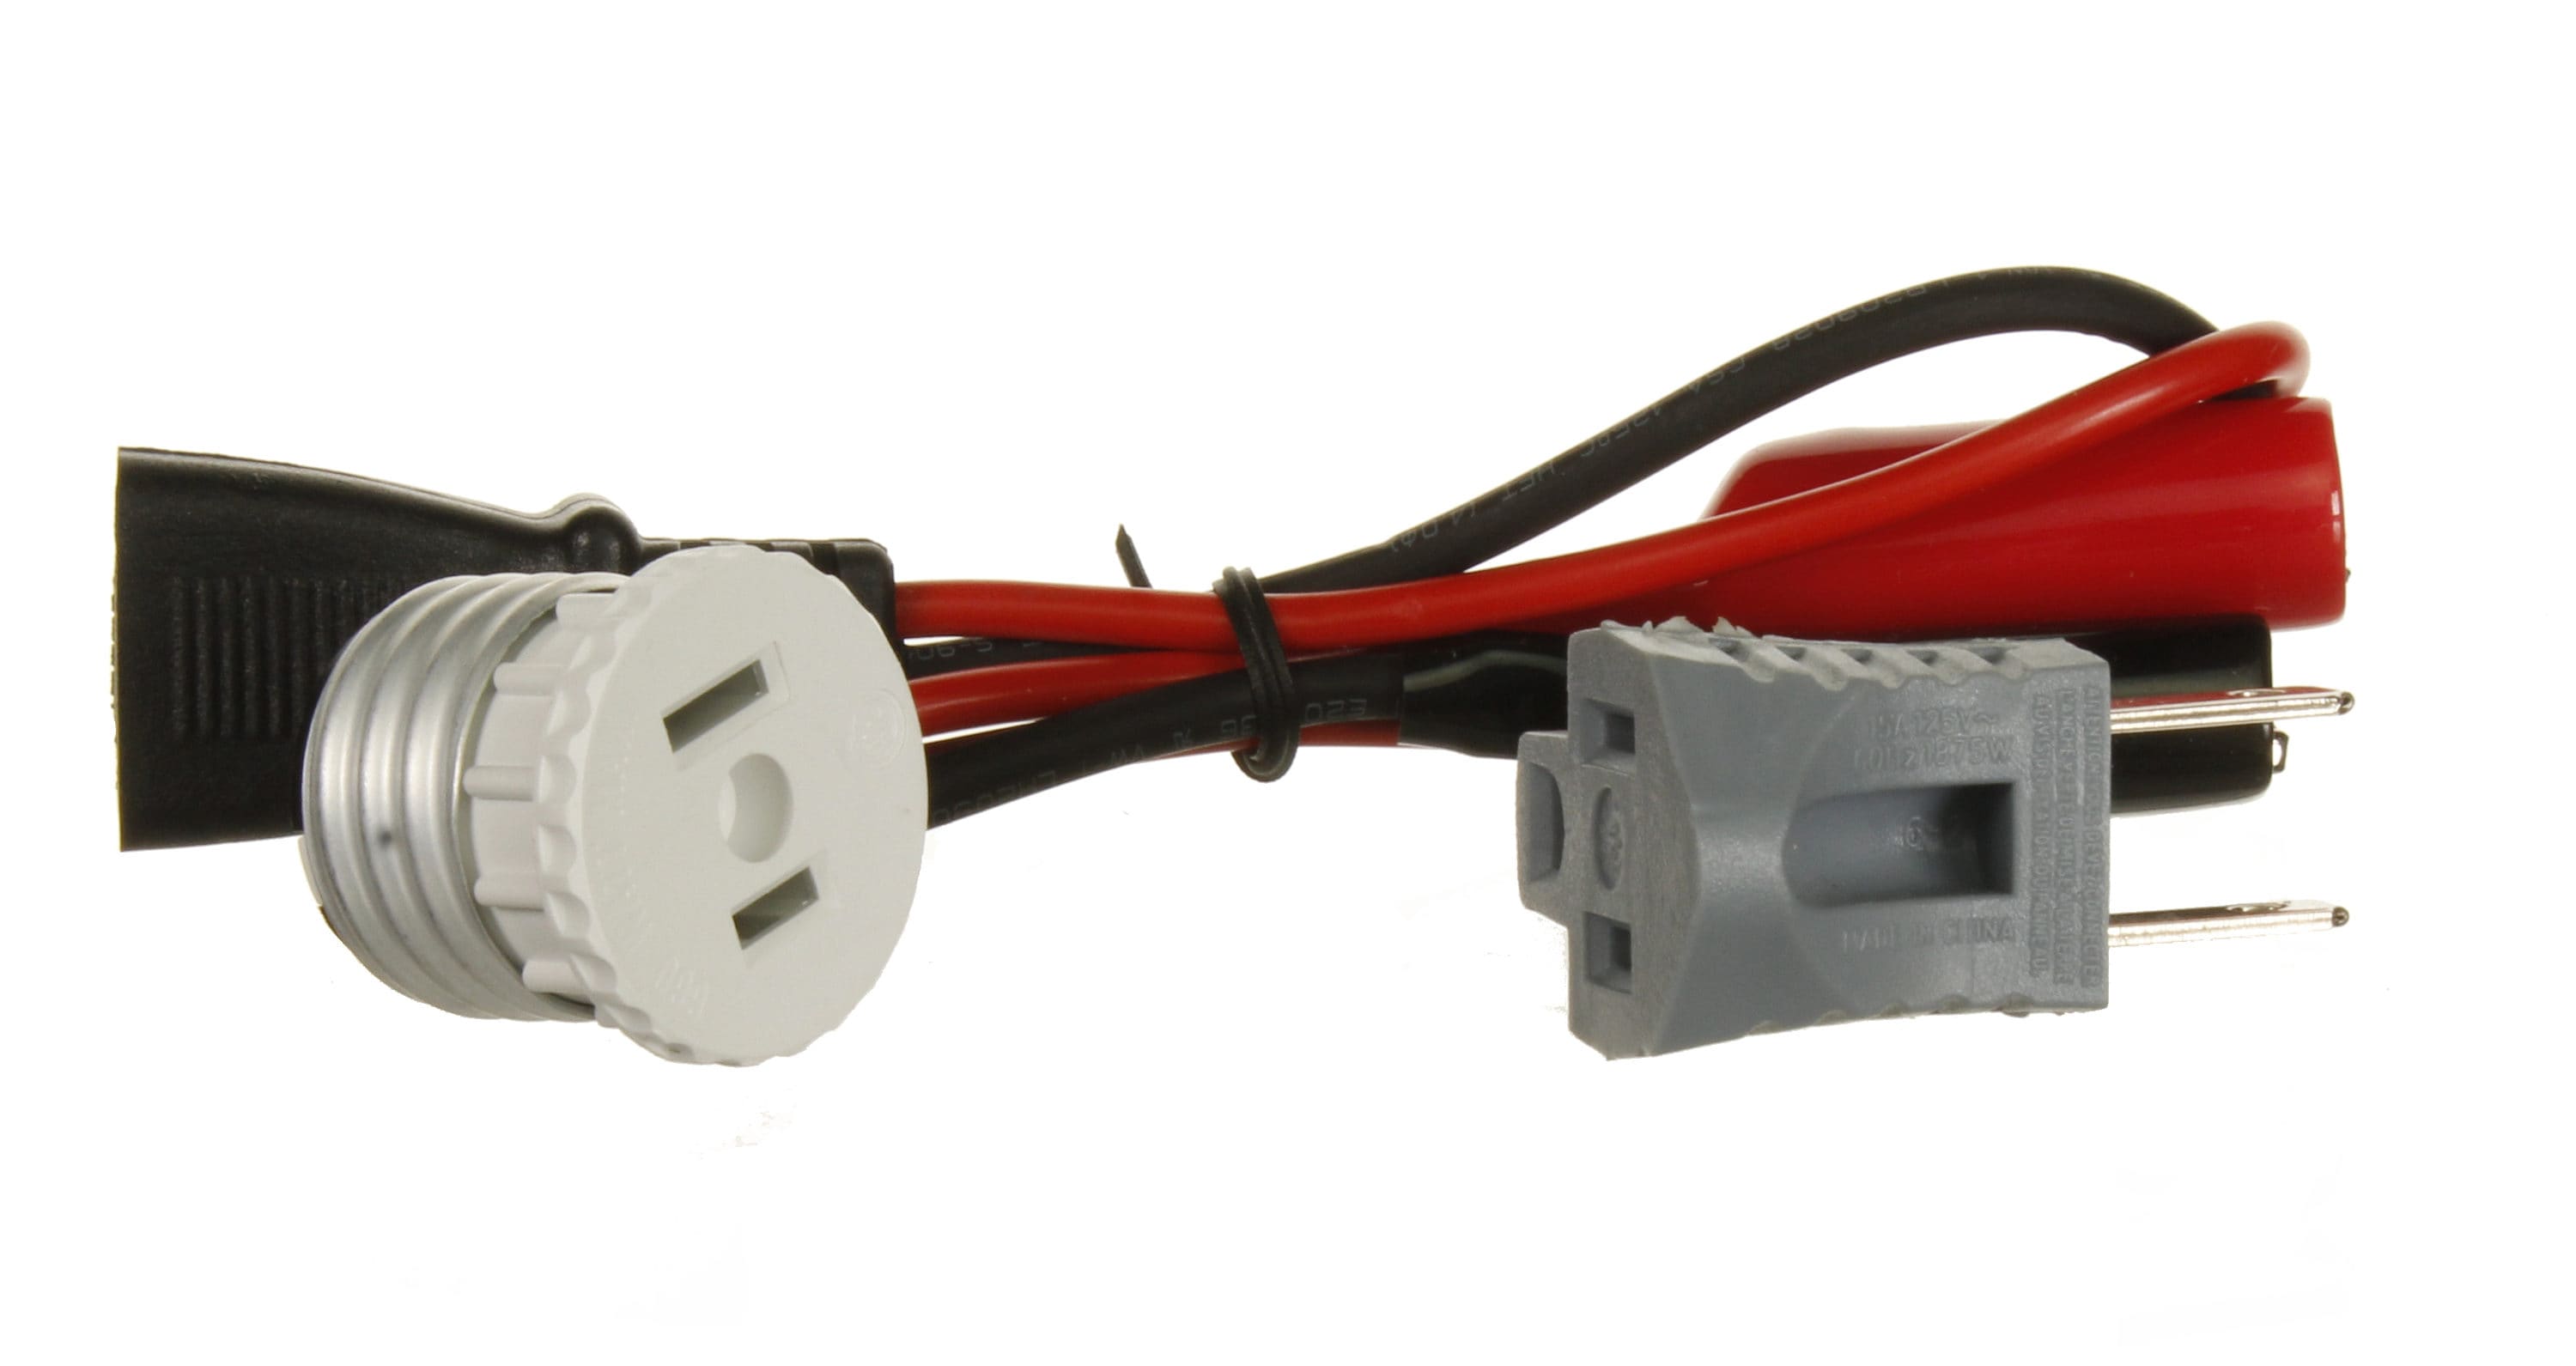 Dreyoo Circuit Breaker Finder Adapter Accessory Kit Circuit Breaker Leads with